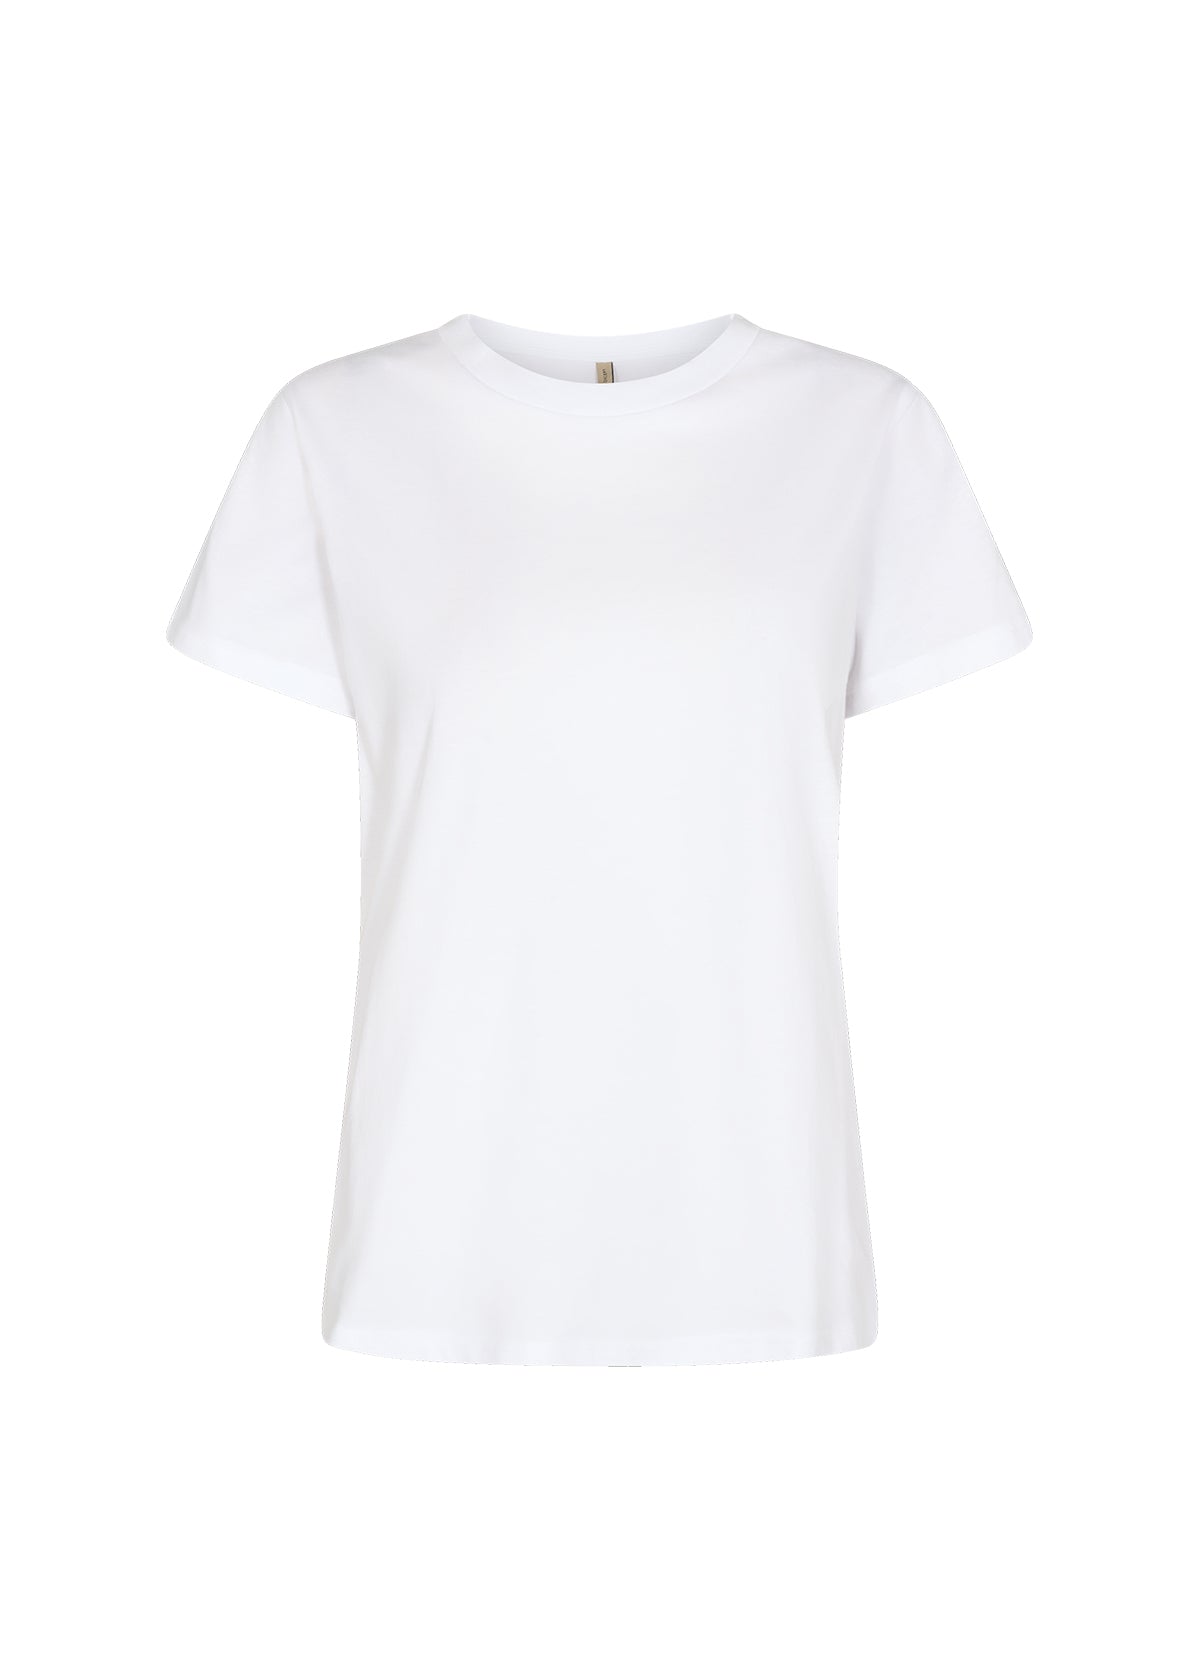 Soya Concept - Derby White Cotton T-Shirt